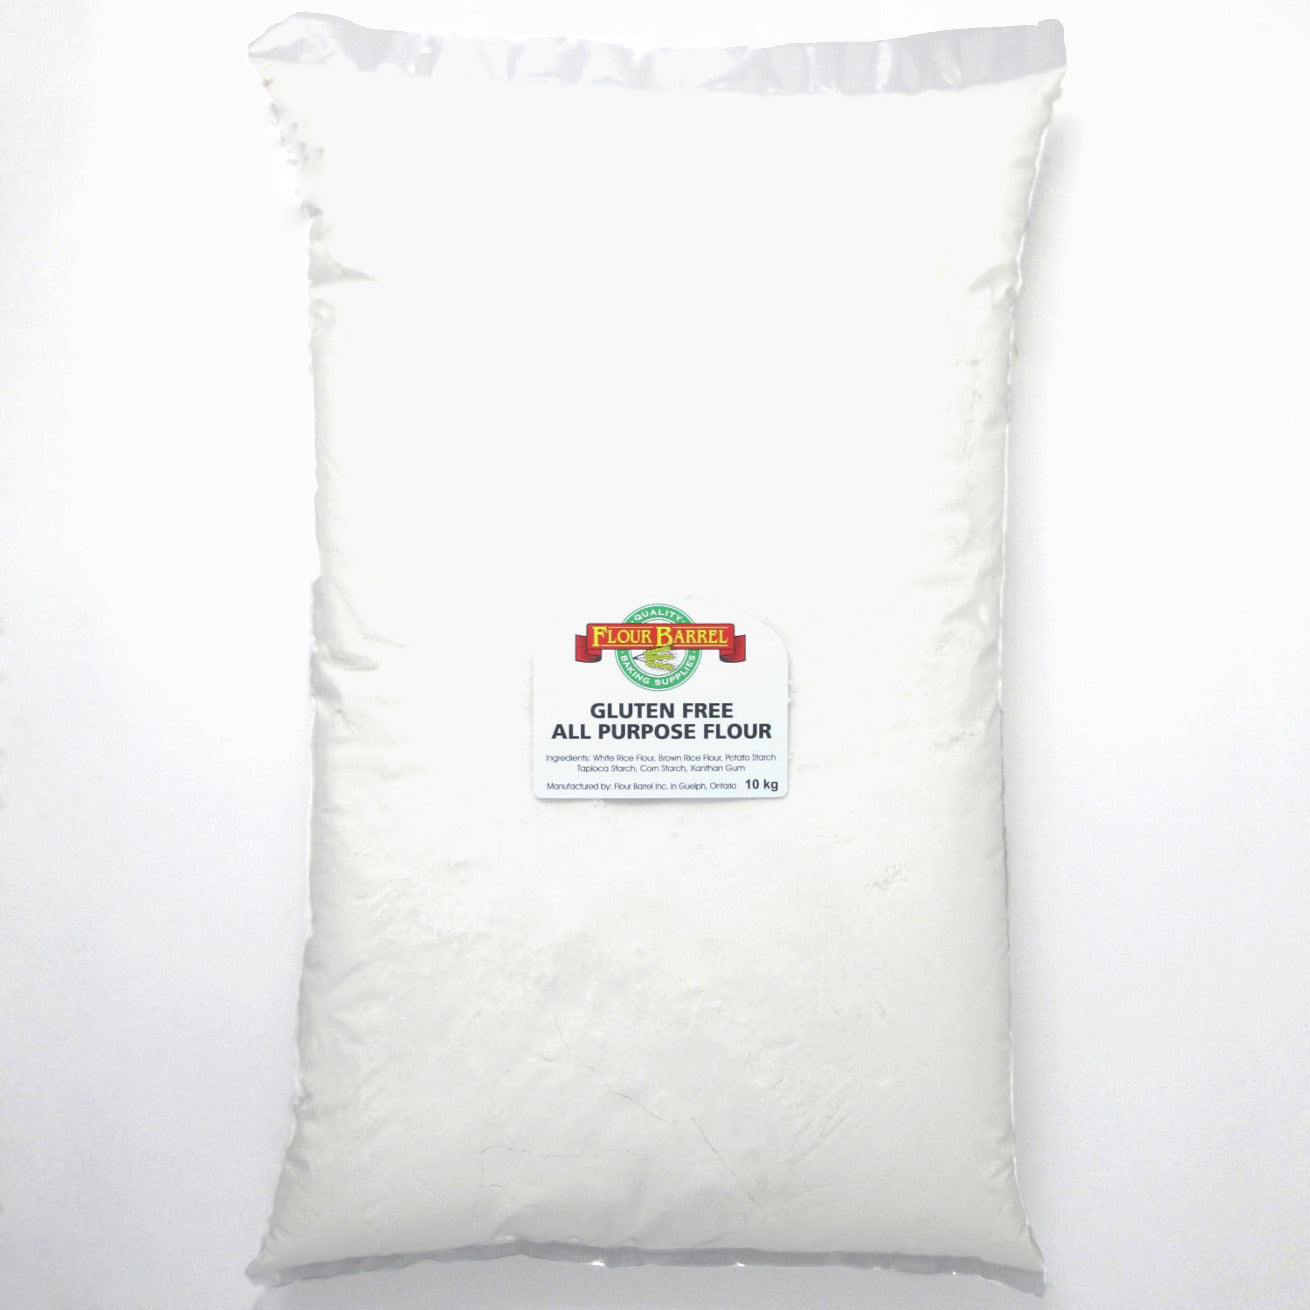 Flour Barrel product image - Gluten Free All Purpose Flour